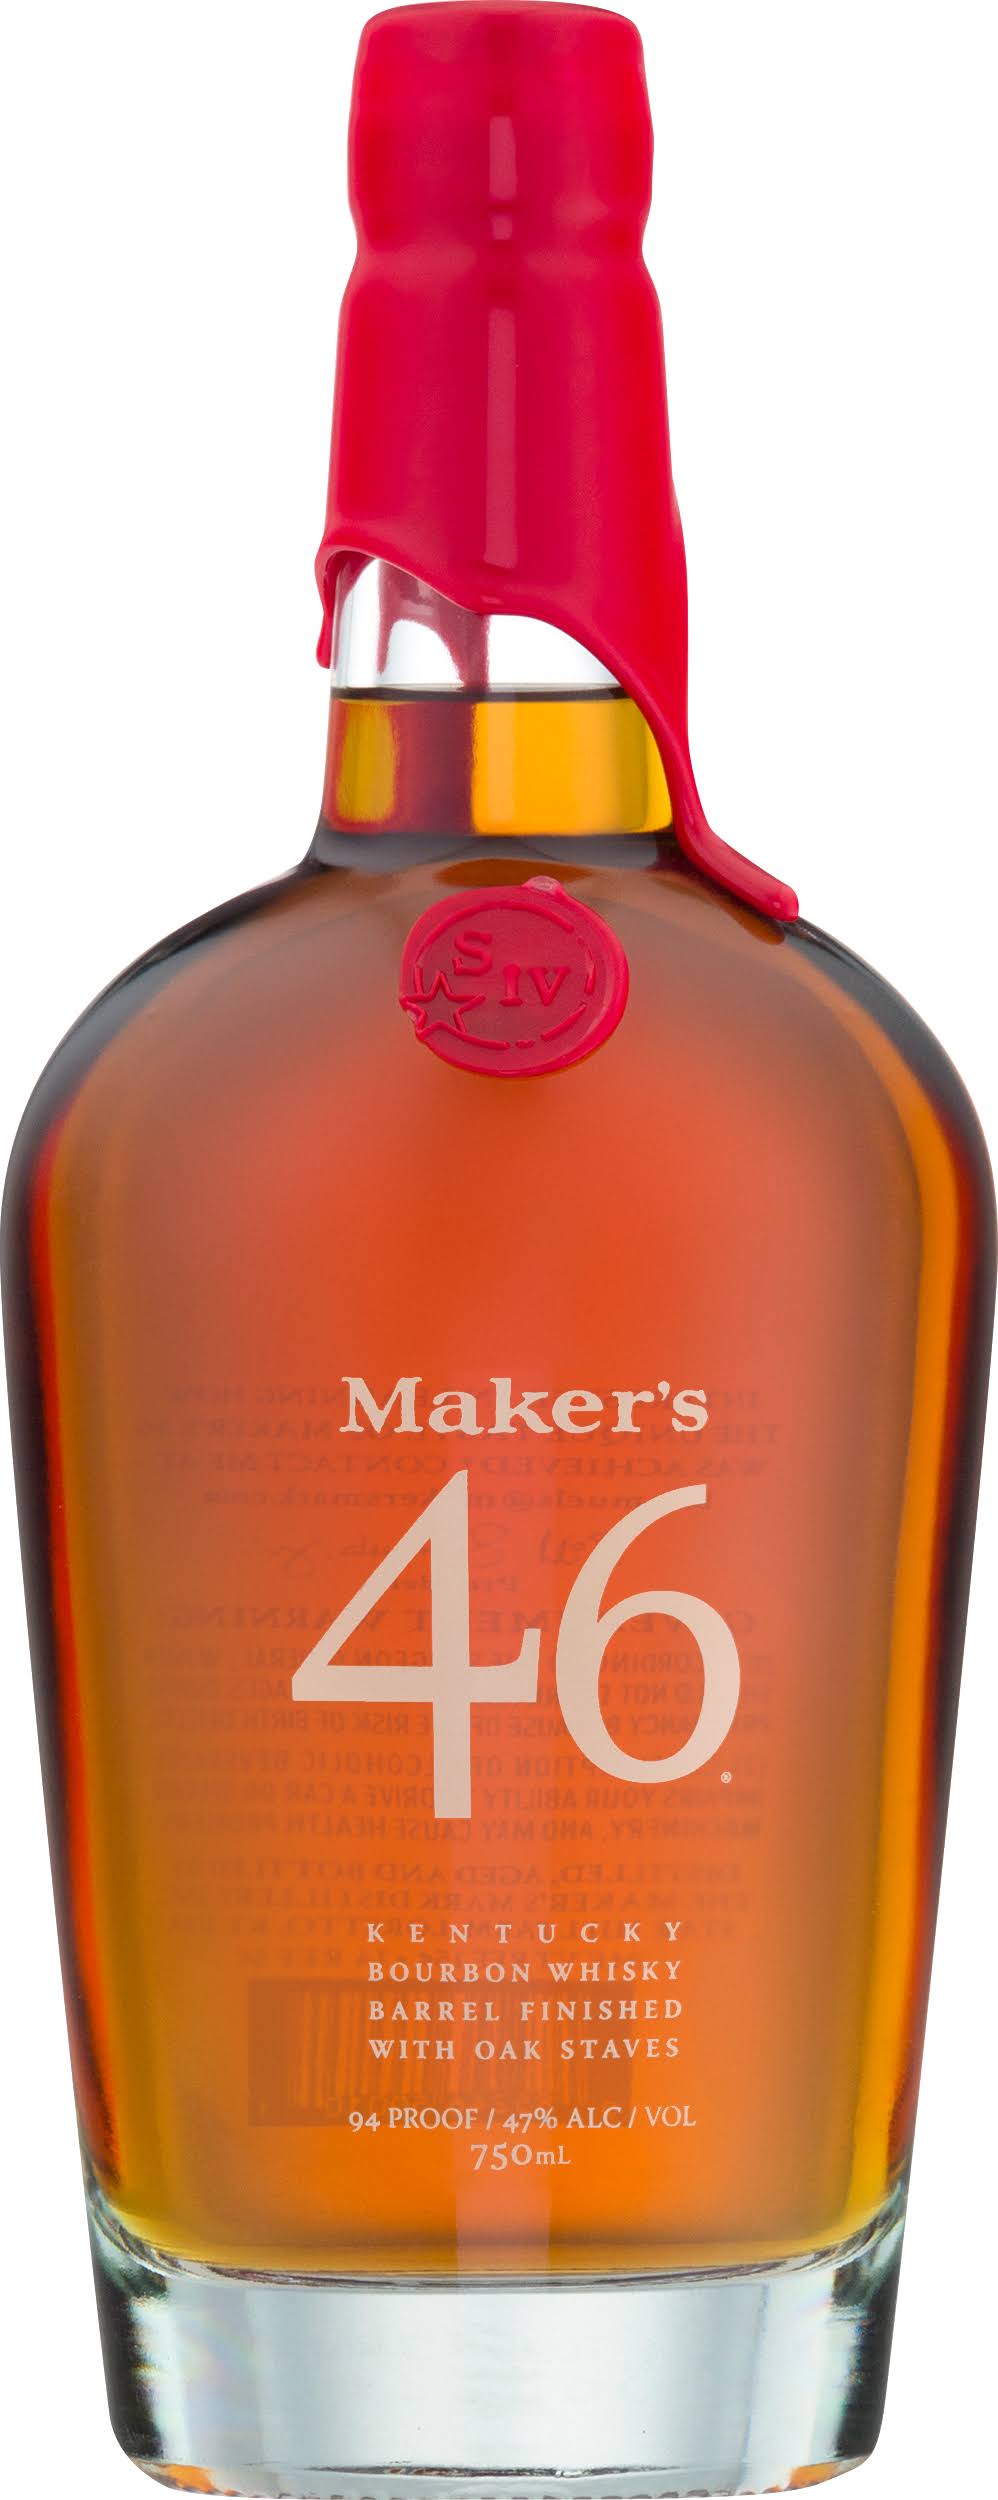 Makers Maker's 46 Whisky, Kentucky Bourbon - 750 ml